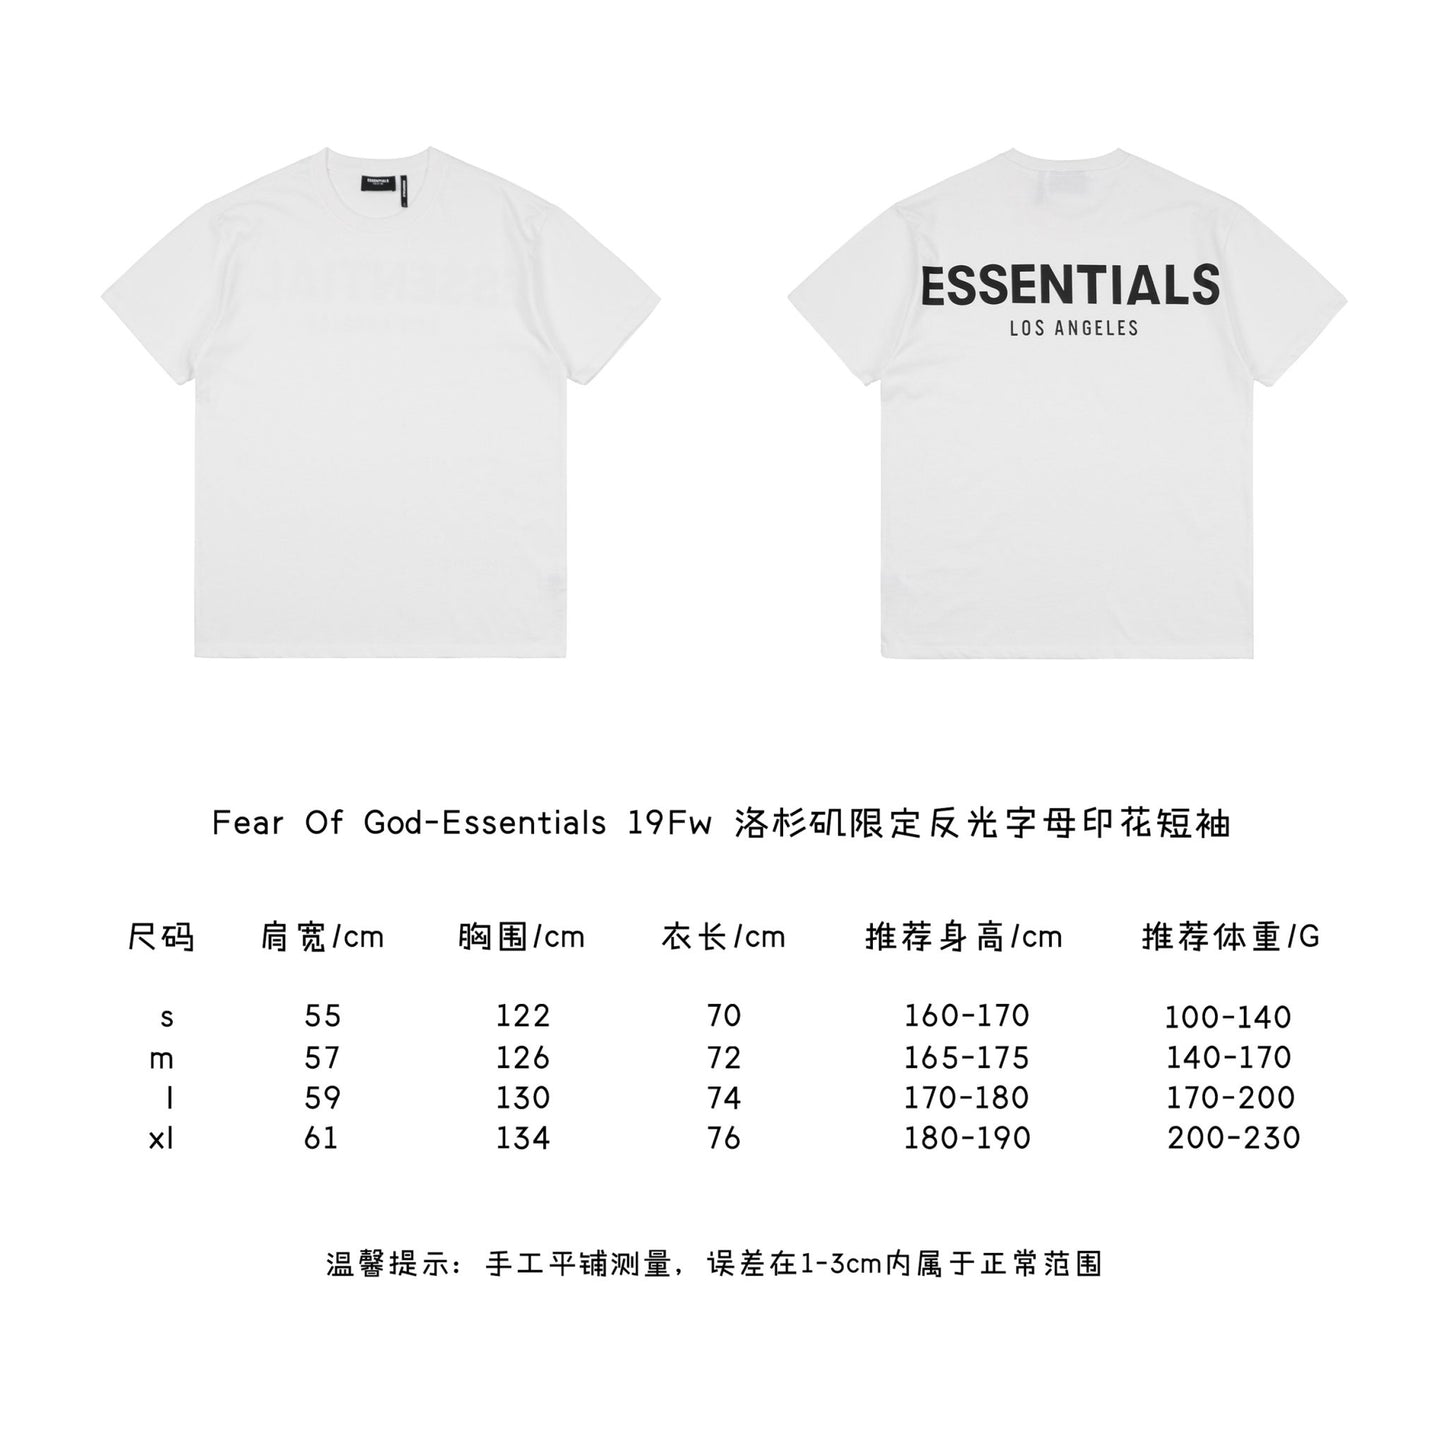 FOG White LA E55ential5 T-Shirt